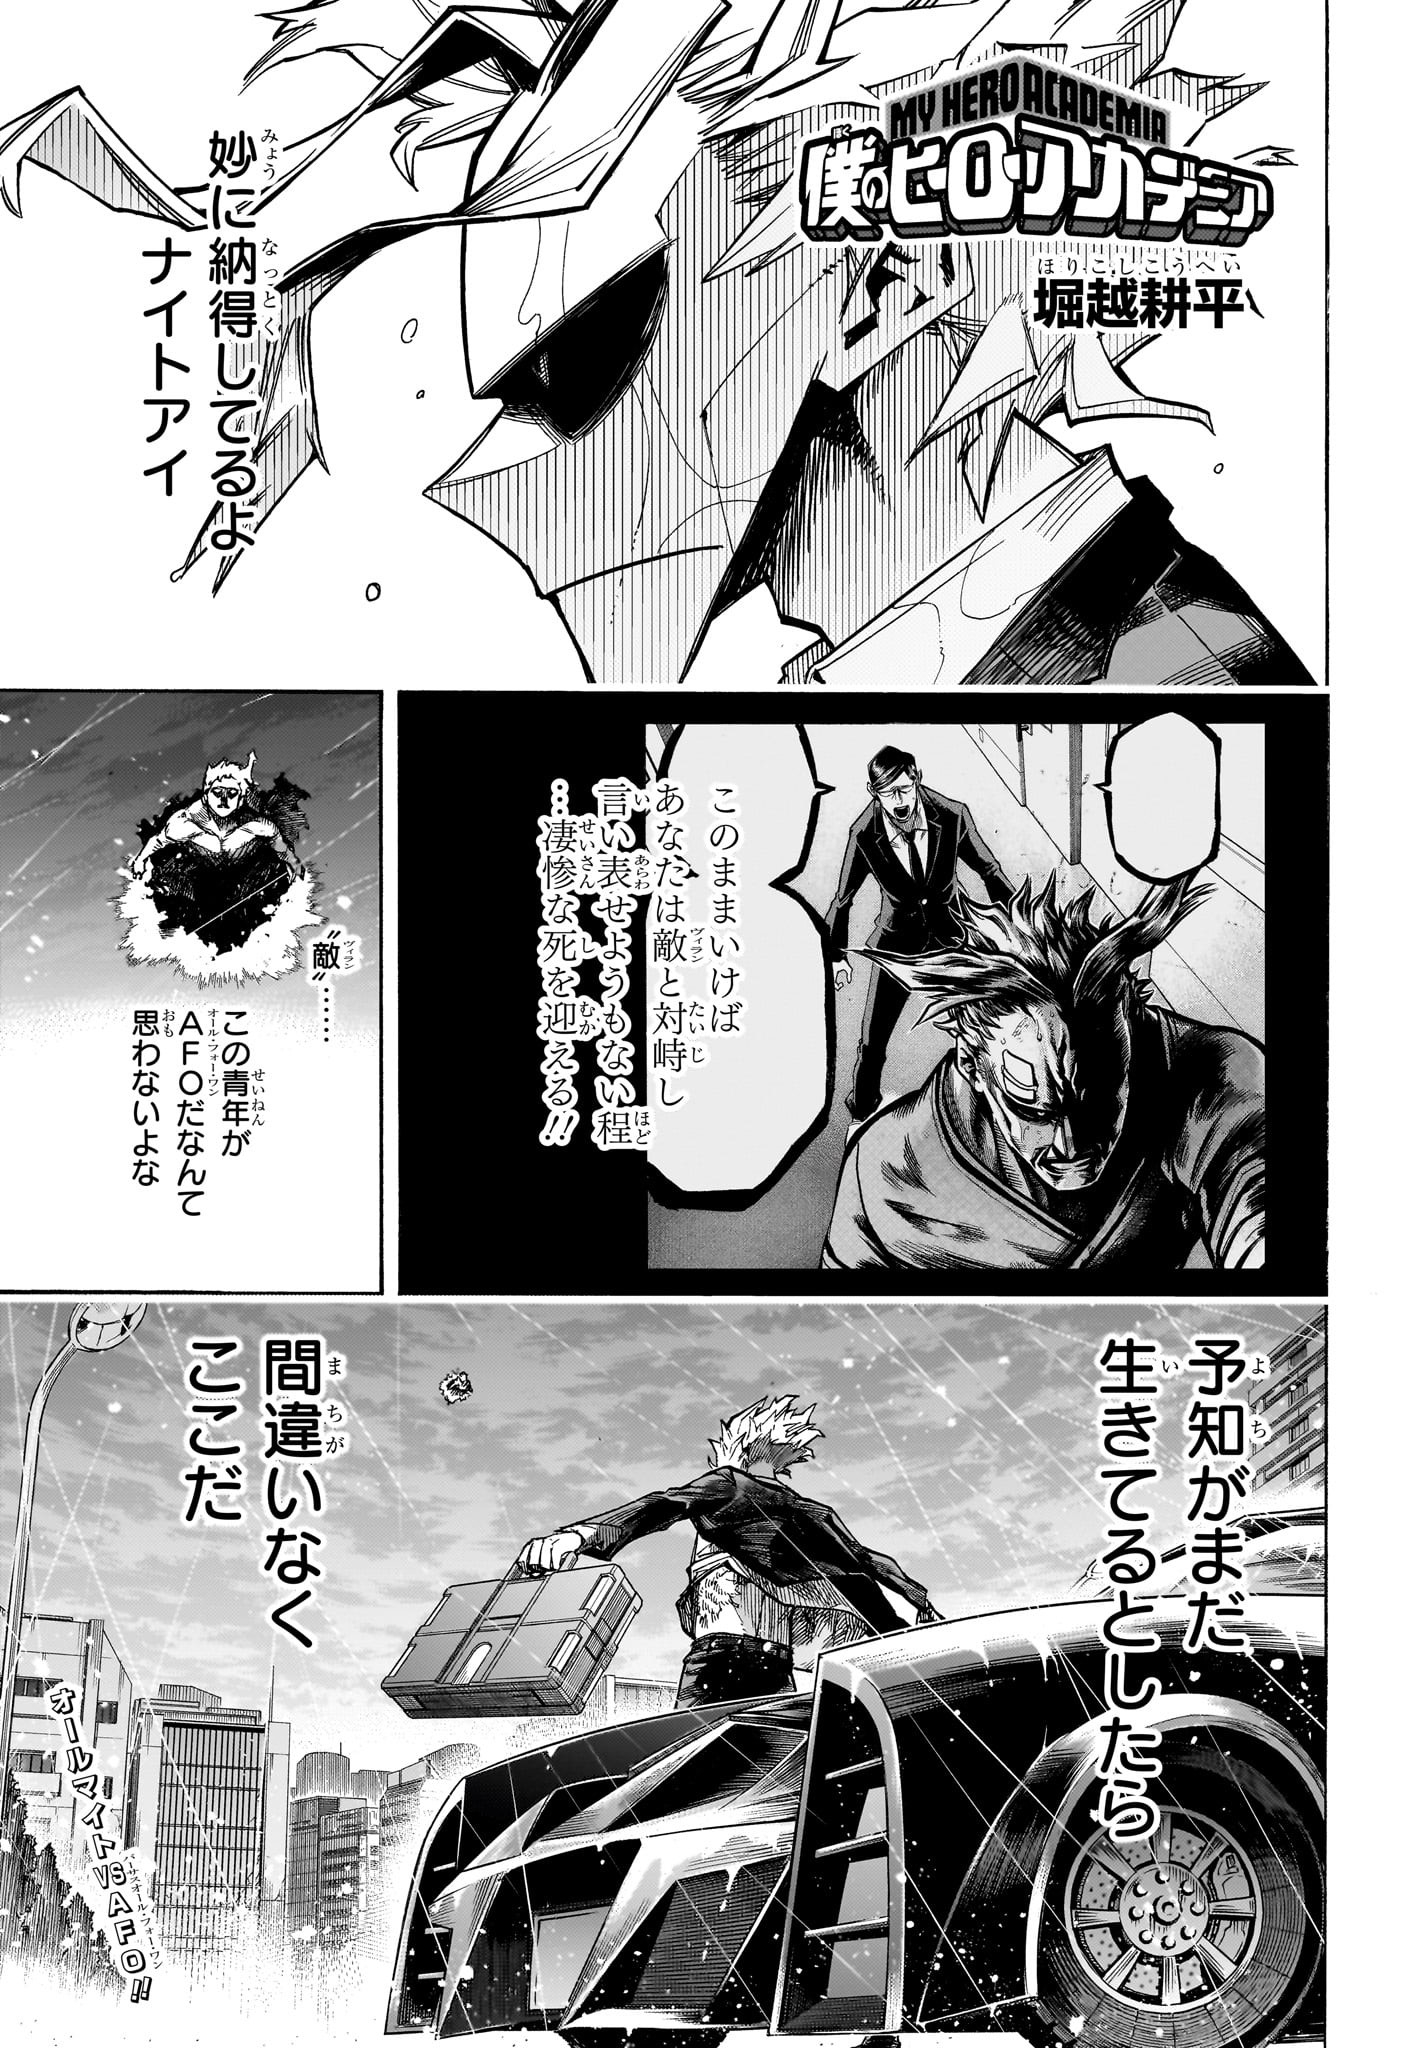 Boku no Hero Academia - Chapter 396 - Page 1